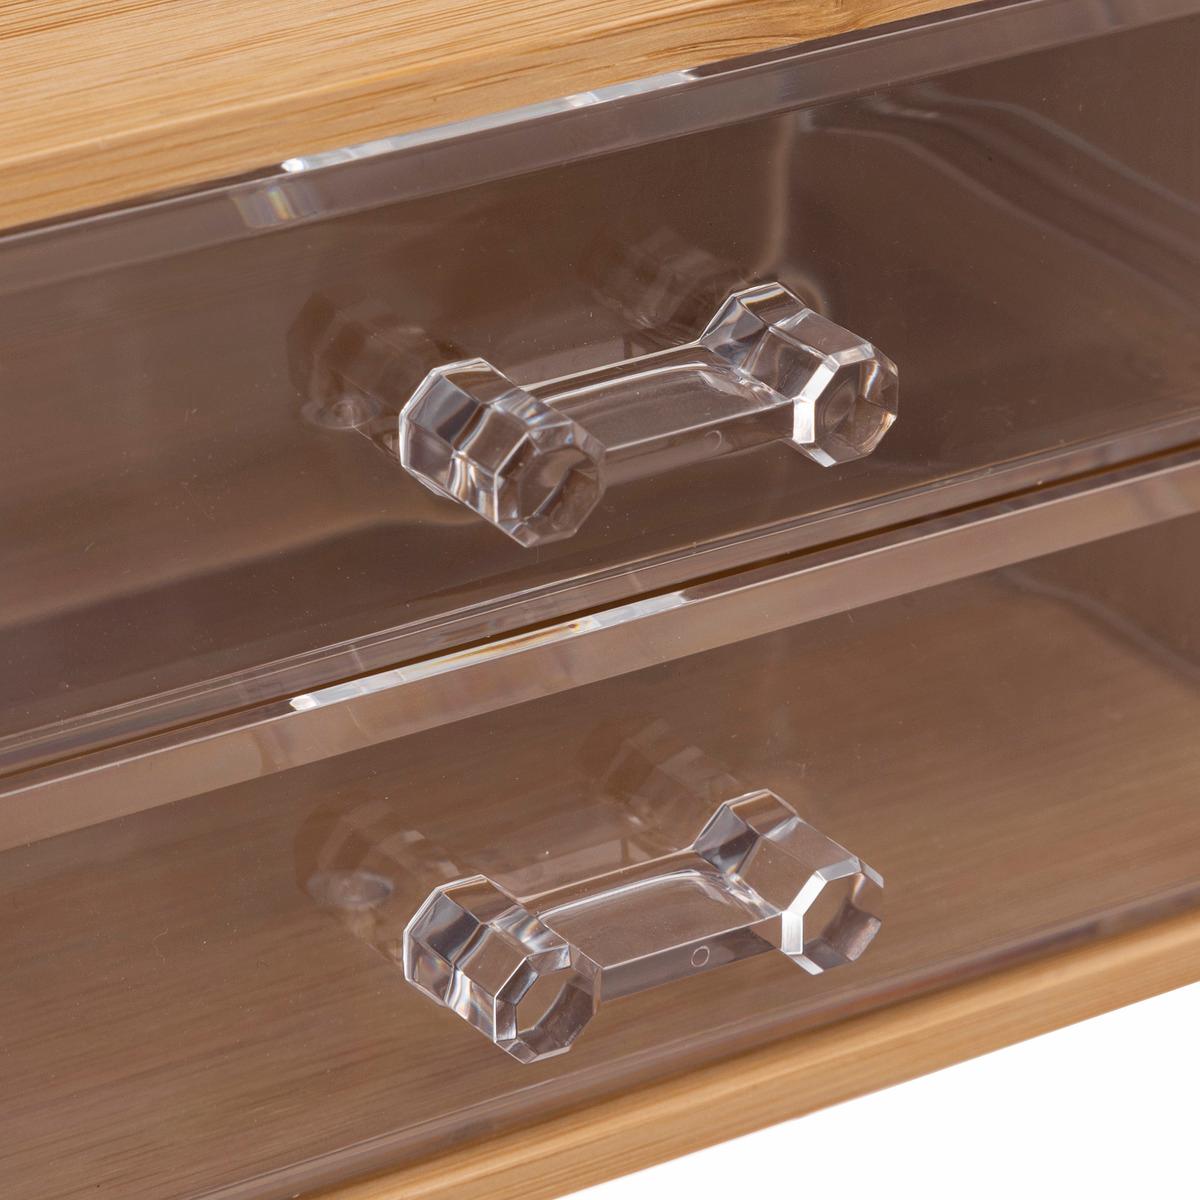 Selena bamboo 3 drawer clear organizer box Furniture for